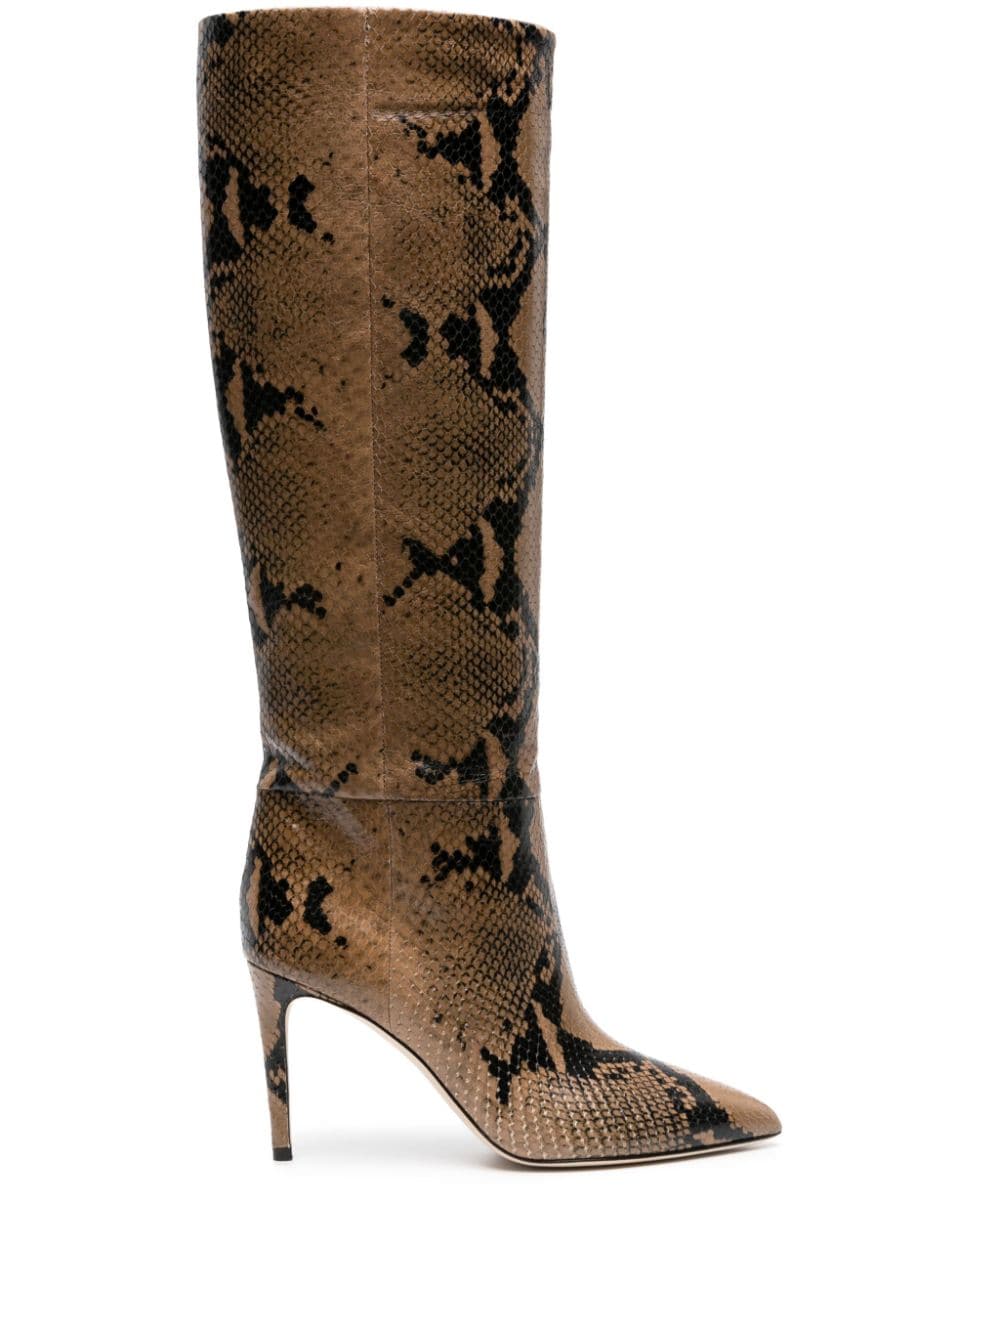 Paris Texas 85mm snakeskin-effecy leather boots - Toni neutri